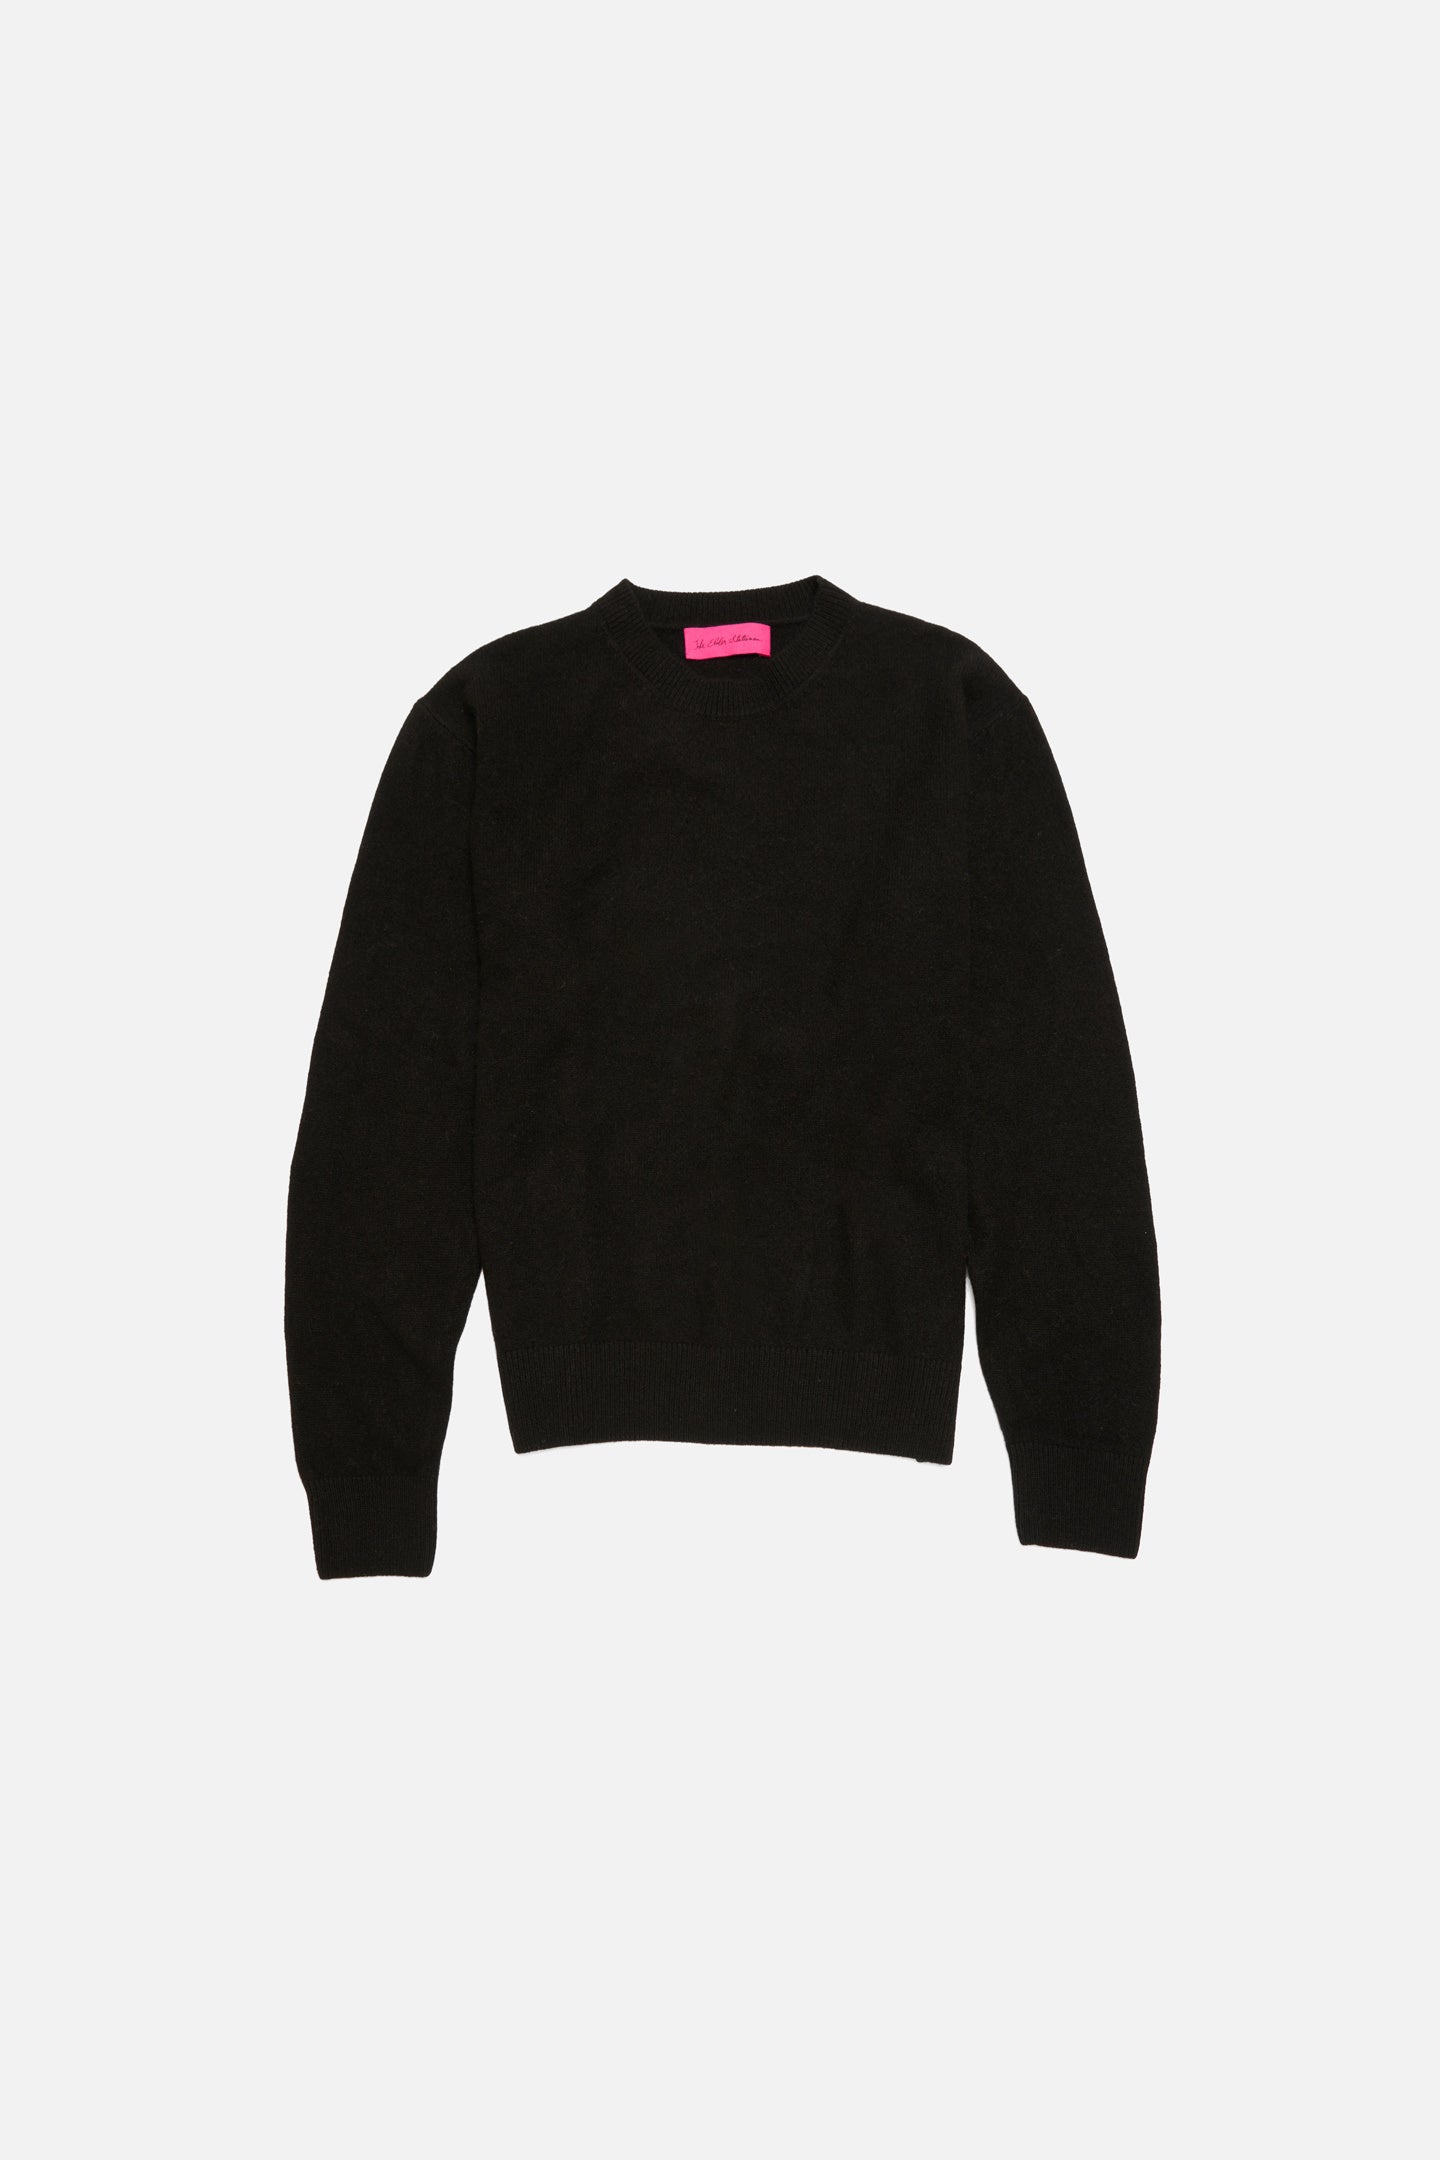 The Elder Statesman Tranquility Black cashmere crew-neck sweater